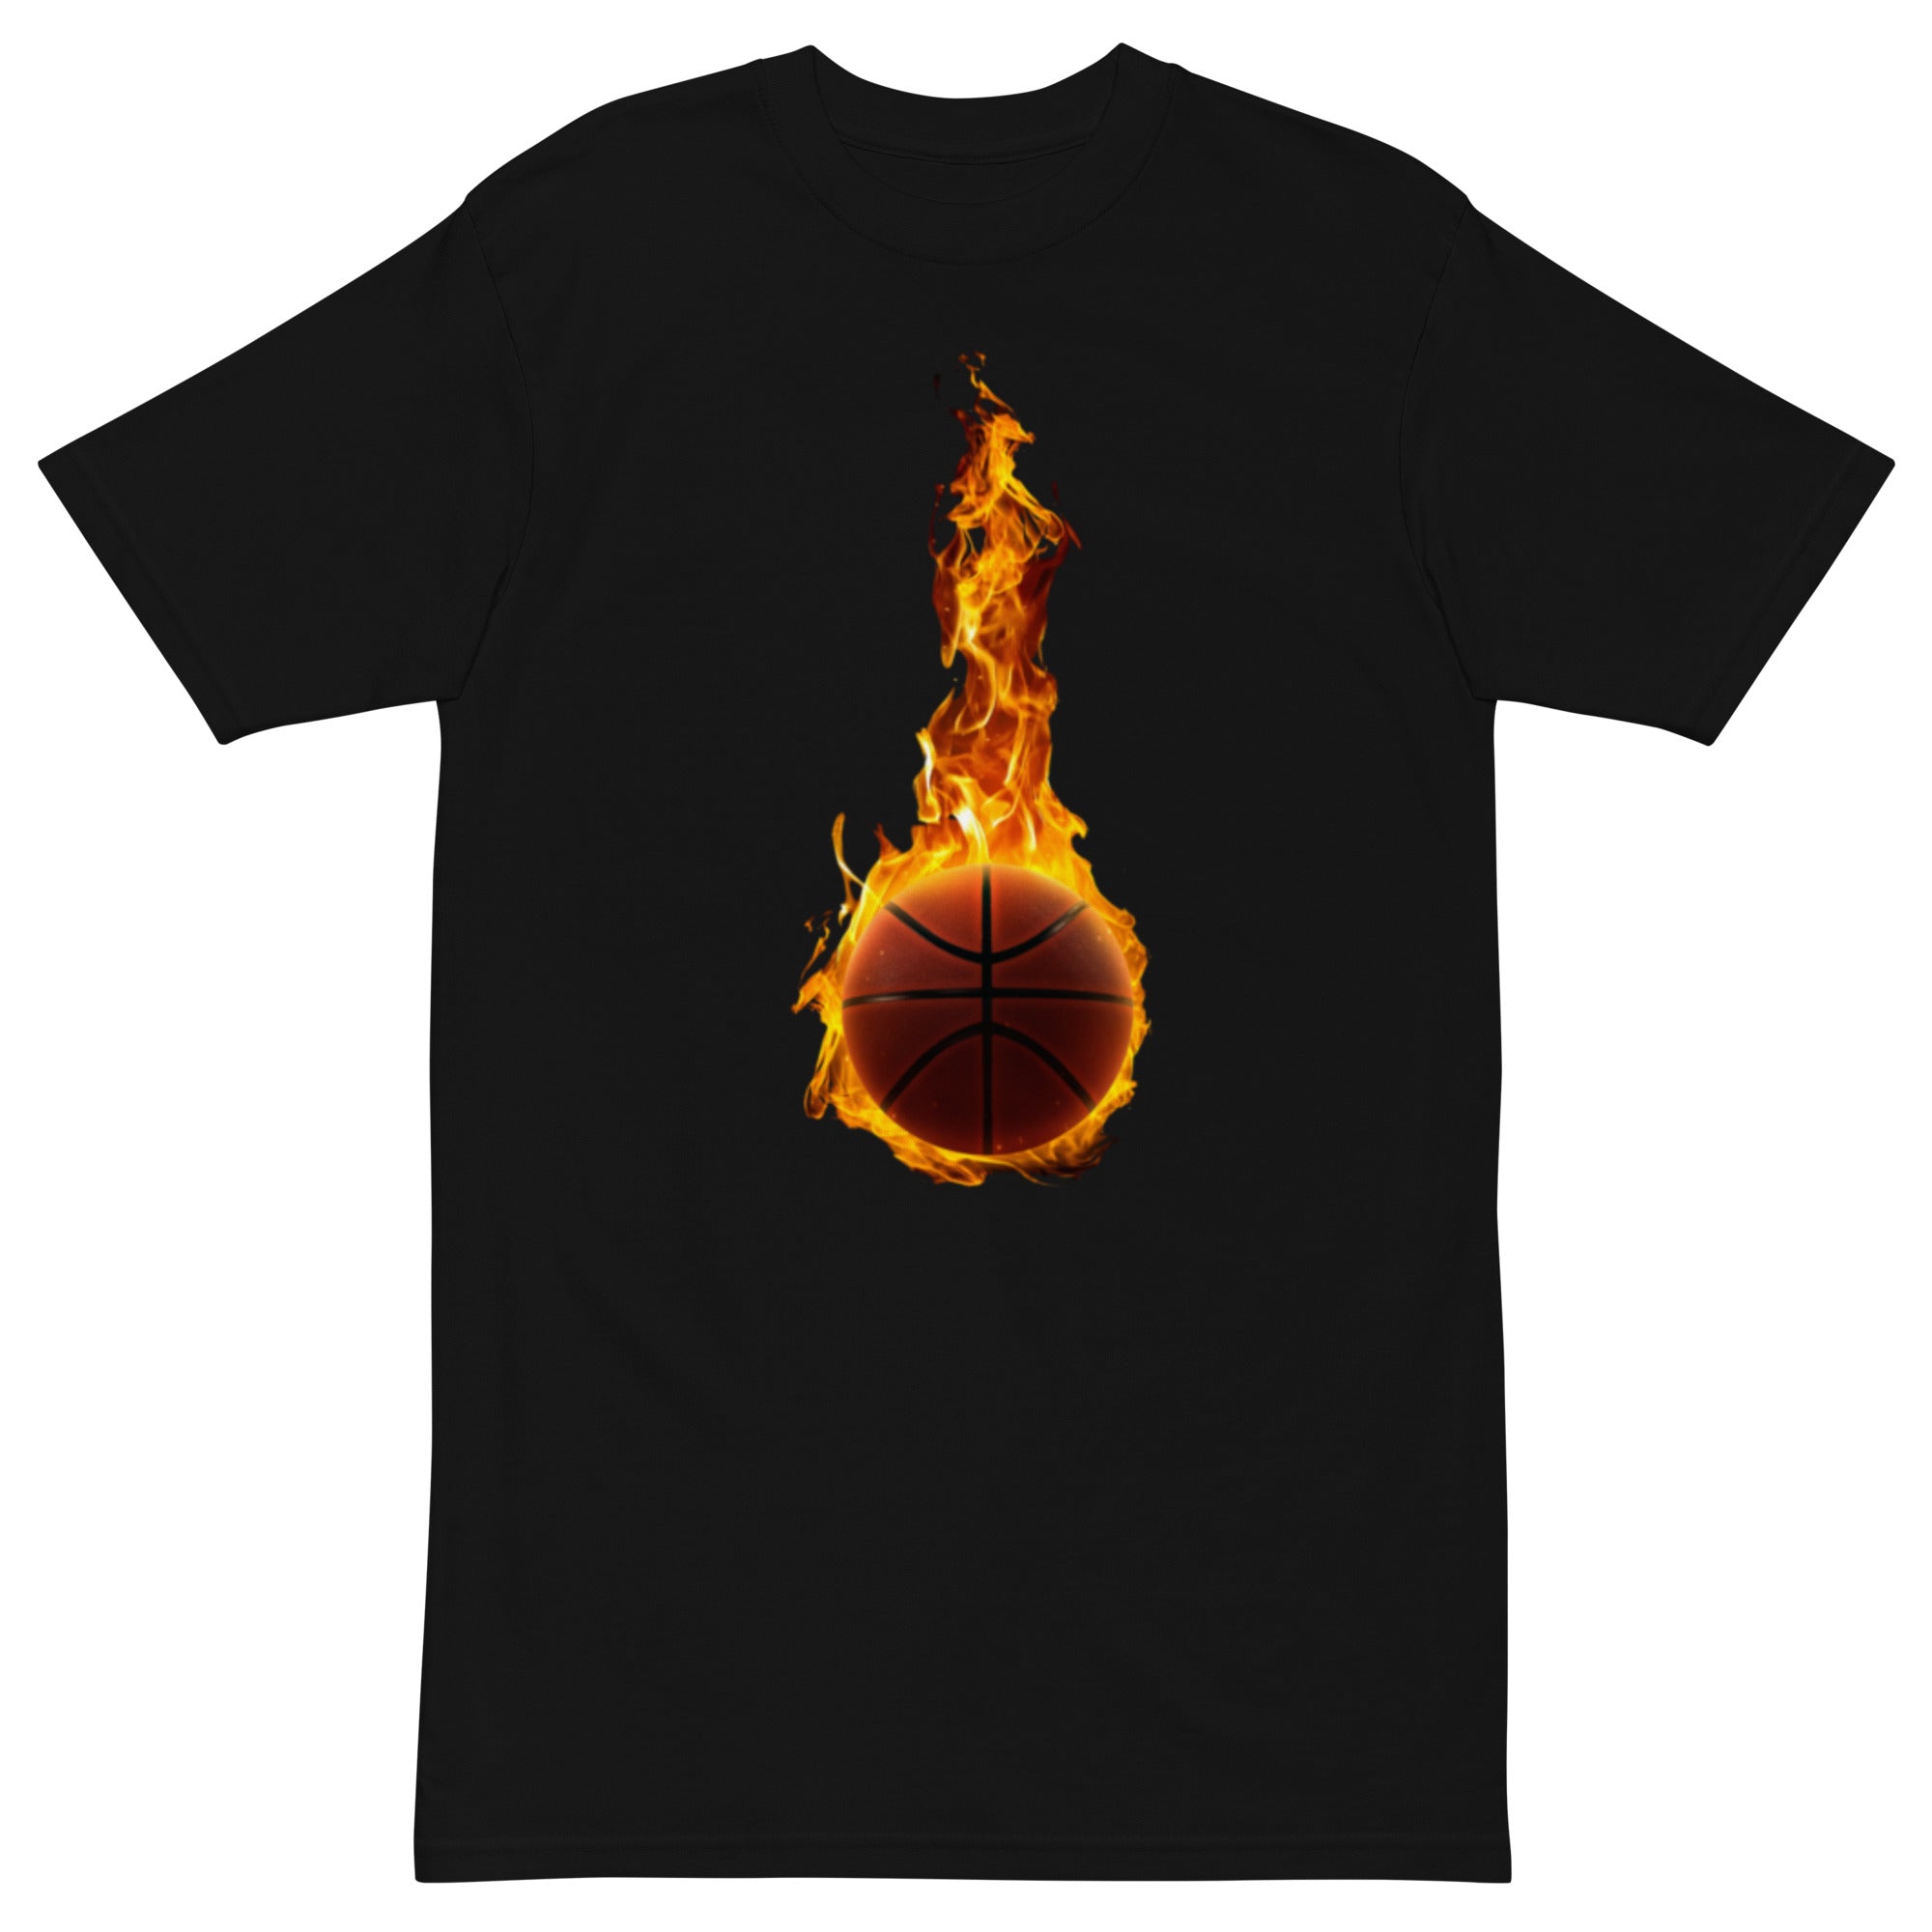 Unisex "Fire" Basketball Tee